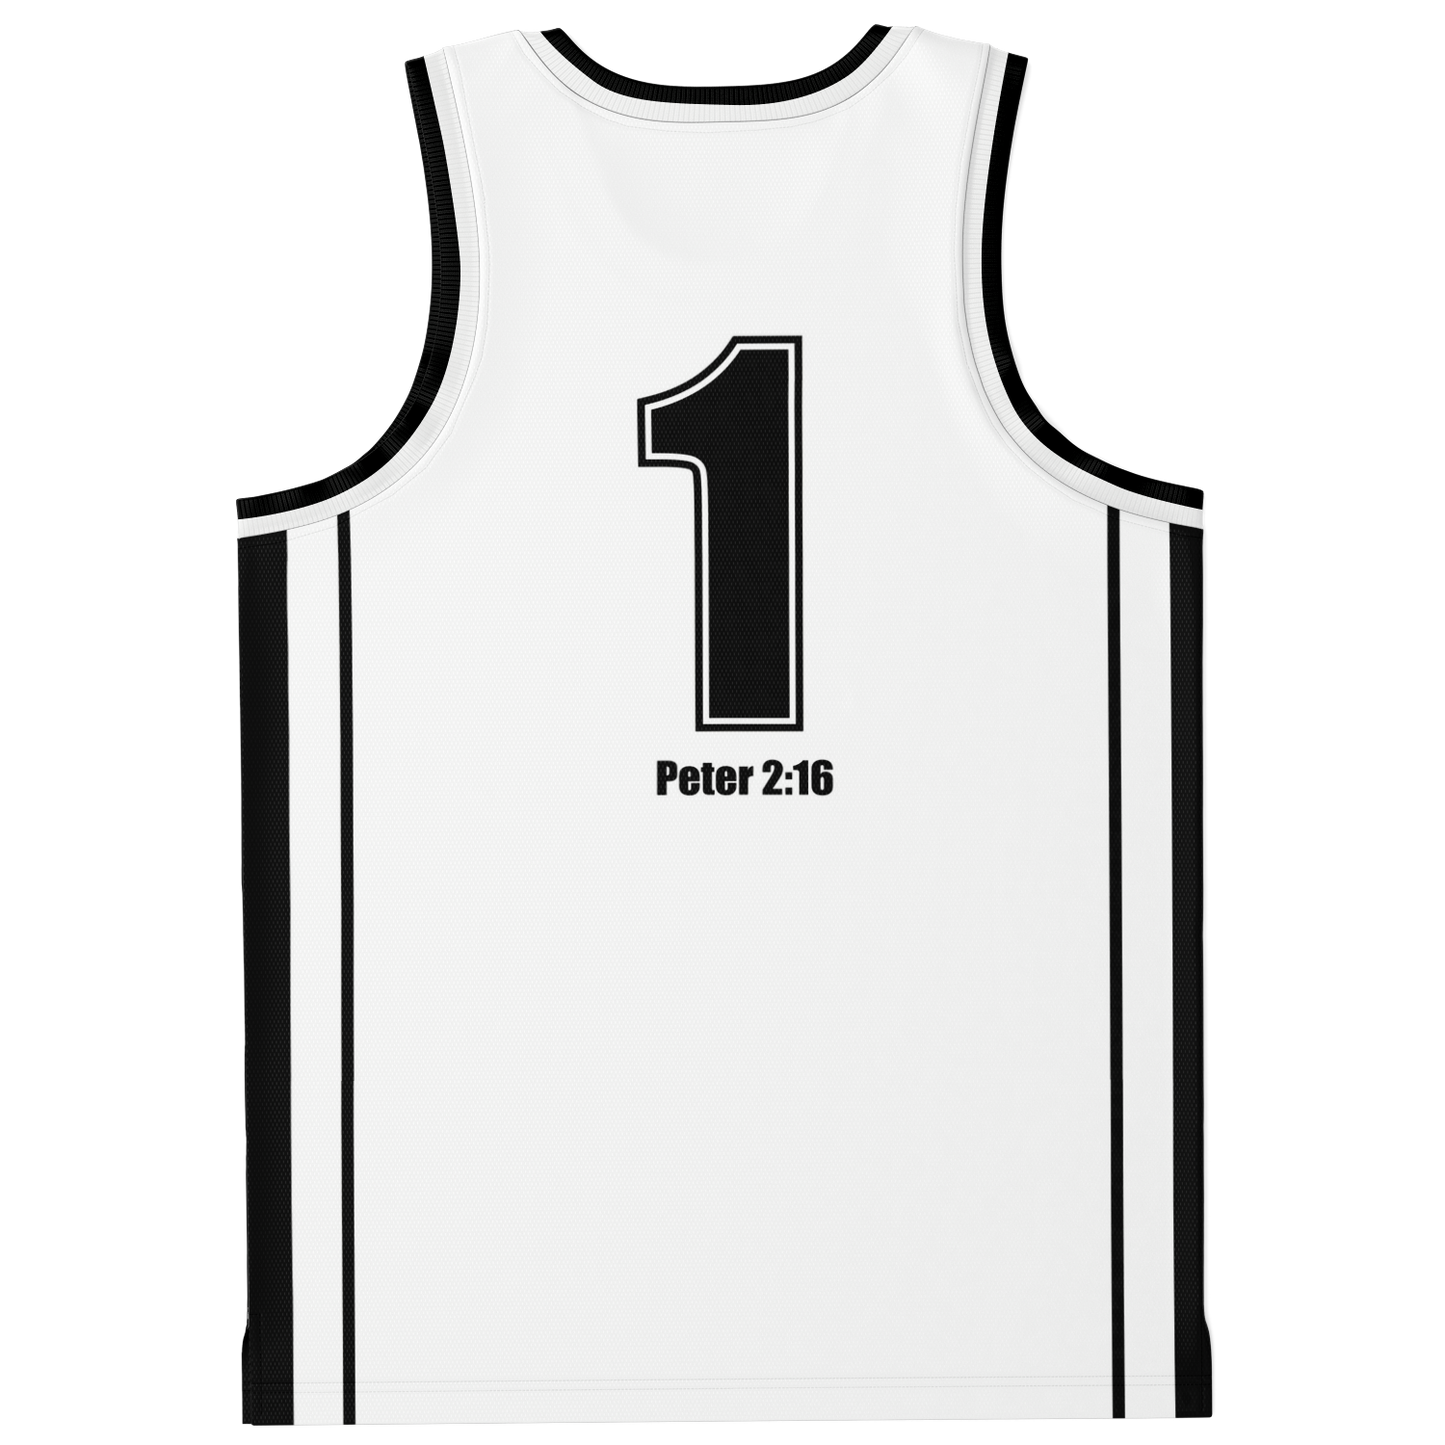 Mavrix Team White - Basketball Jersey